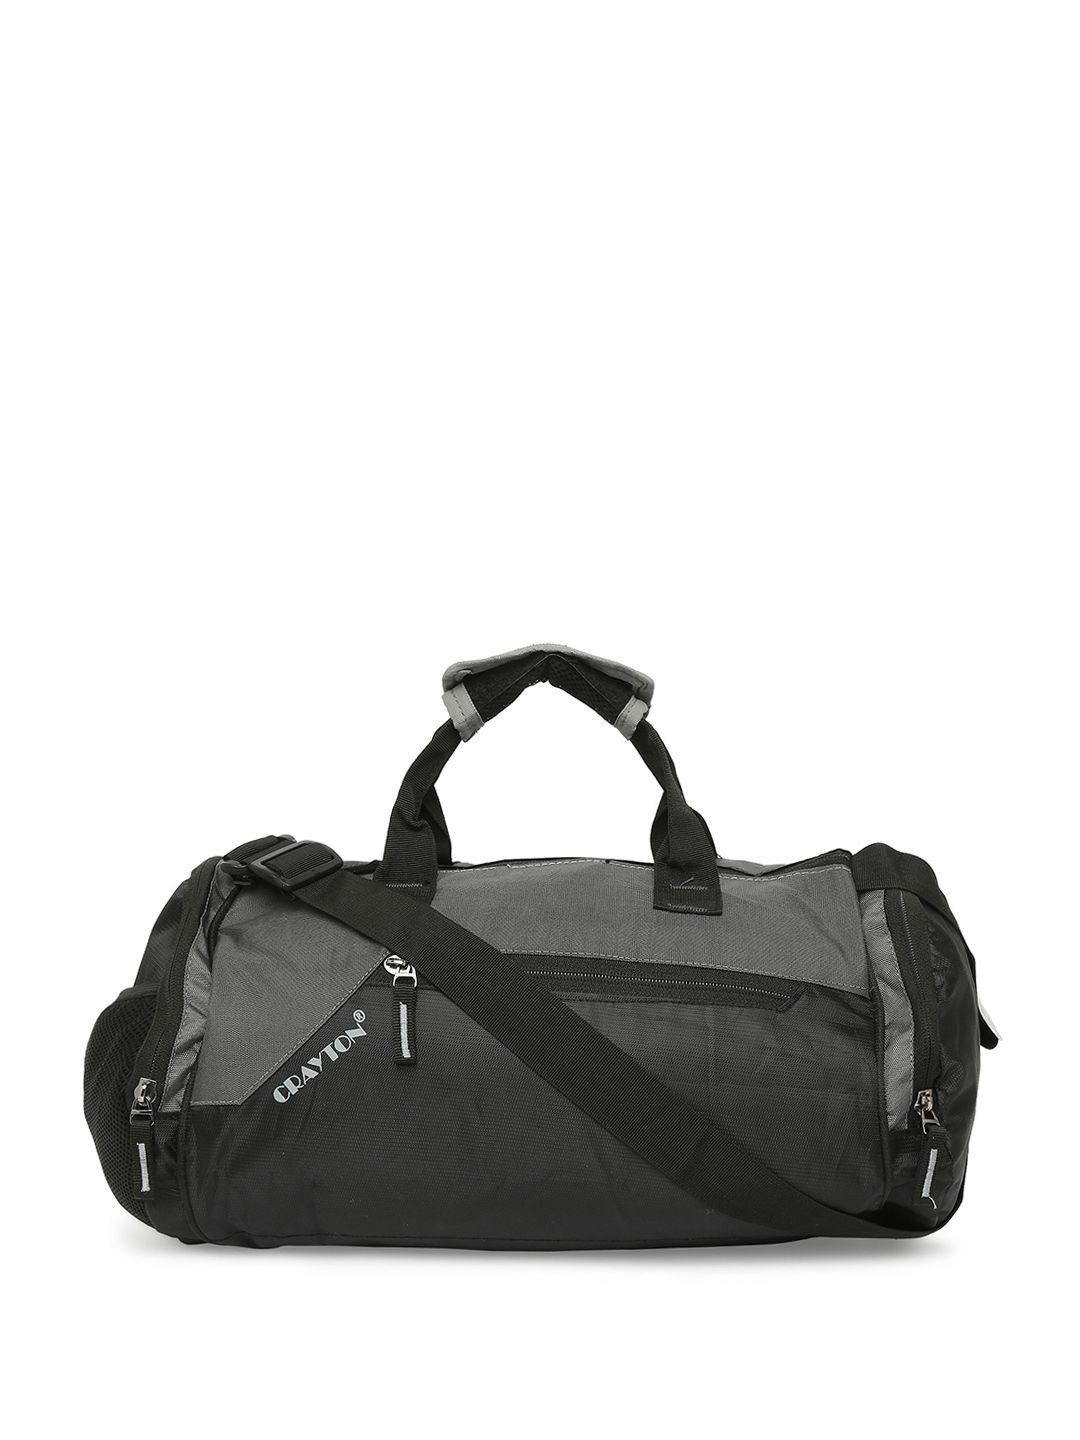 crayton unisex colourblocked duffel bag